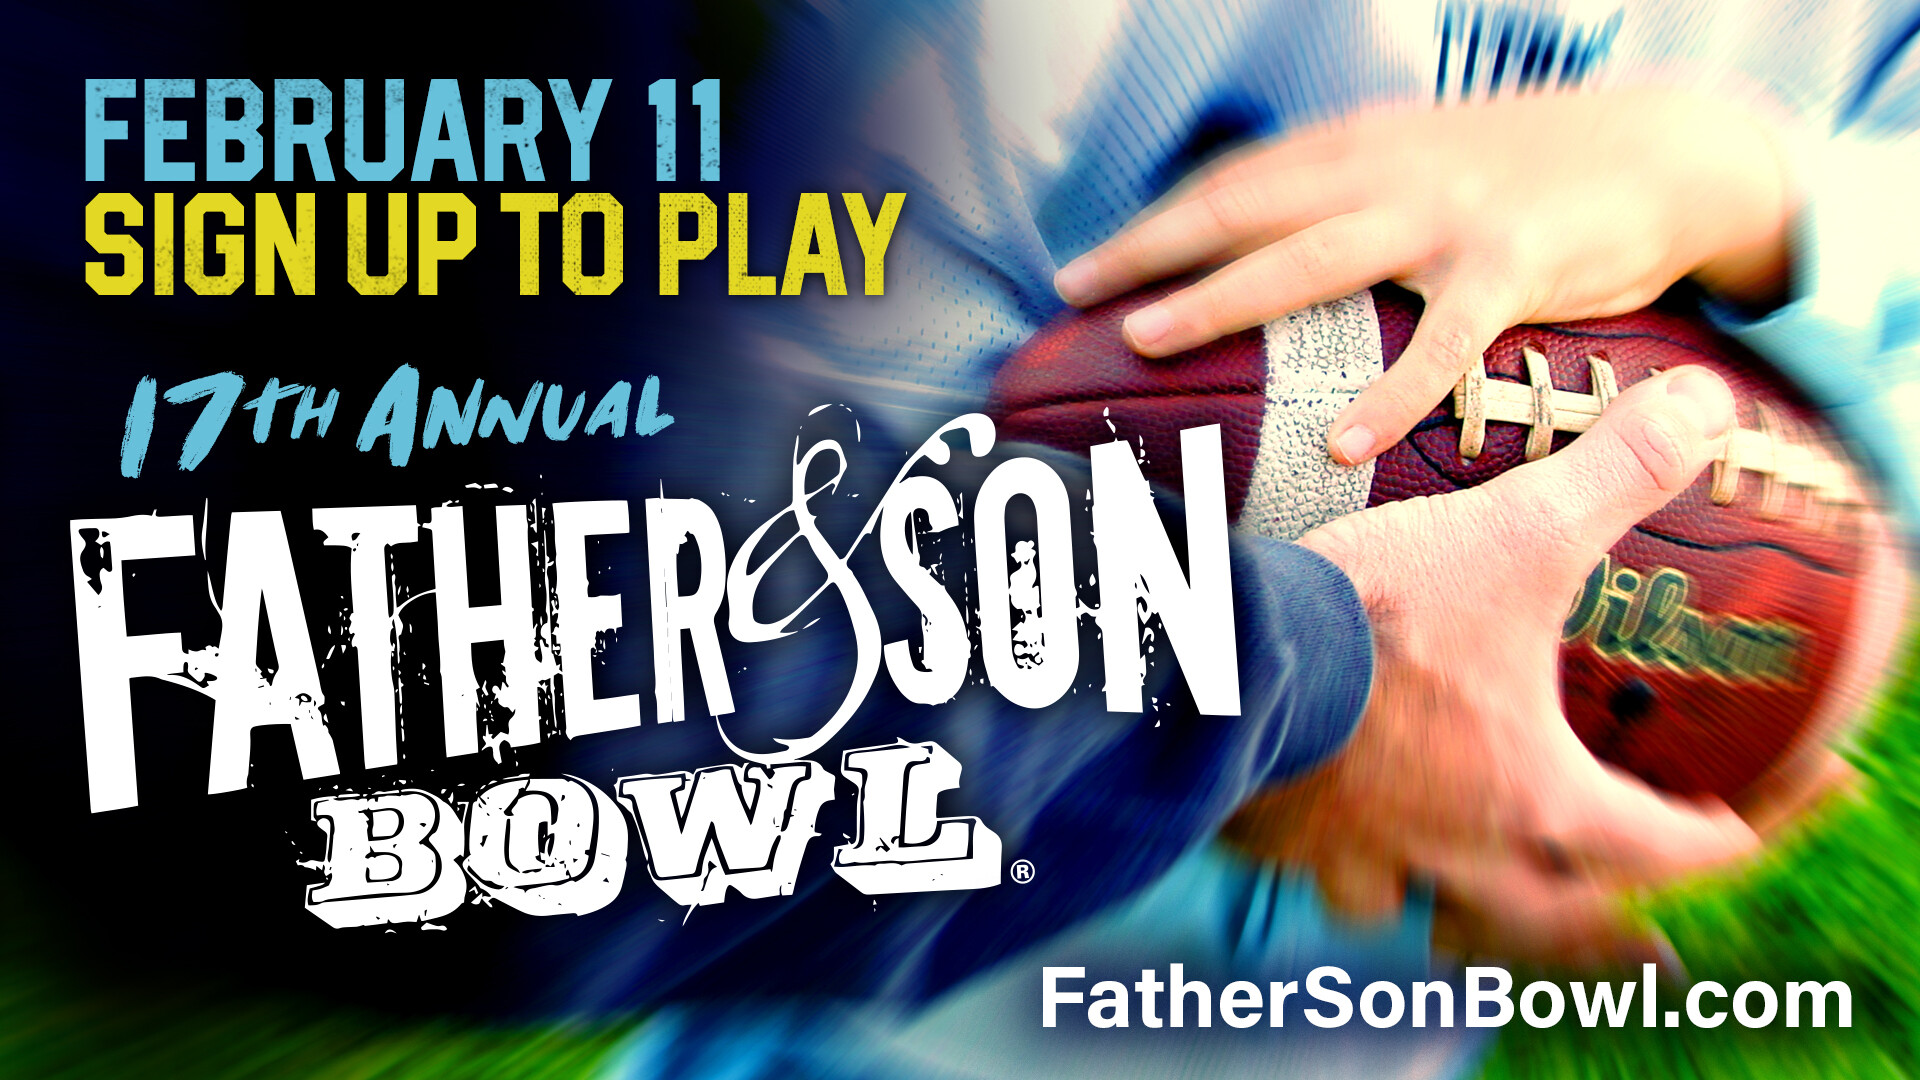 Father & Son Bowl